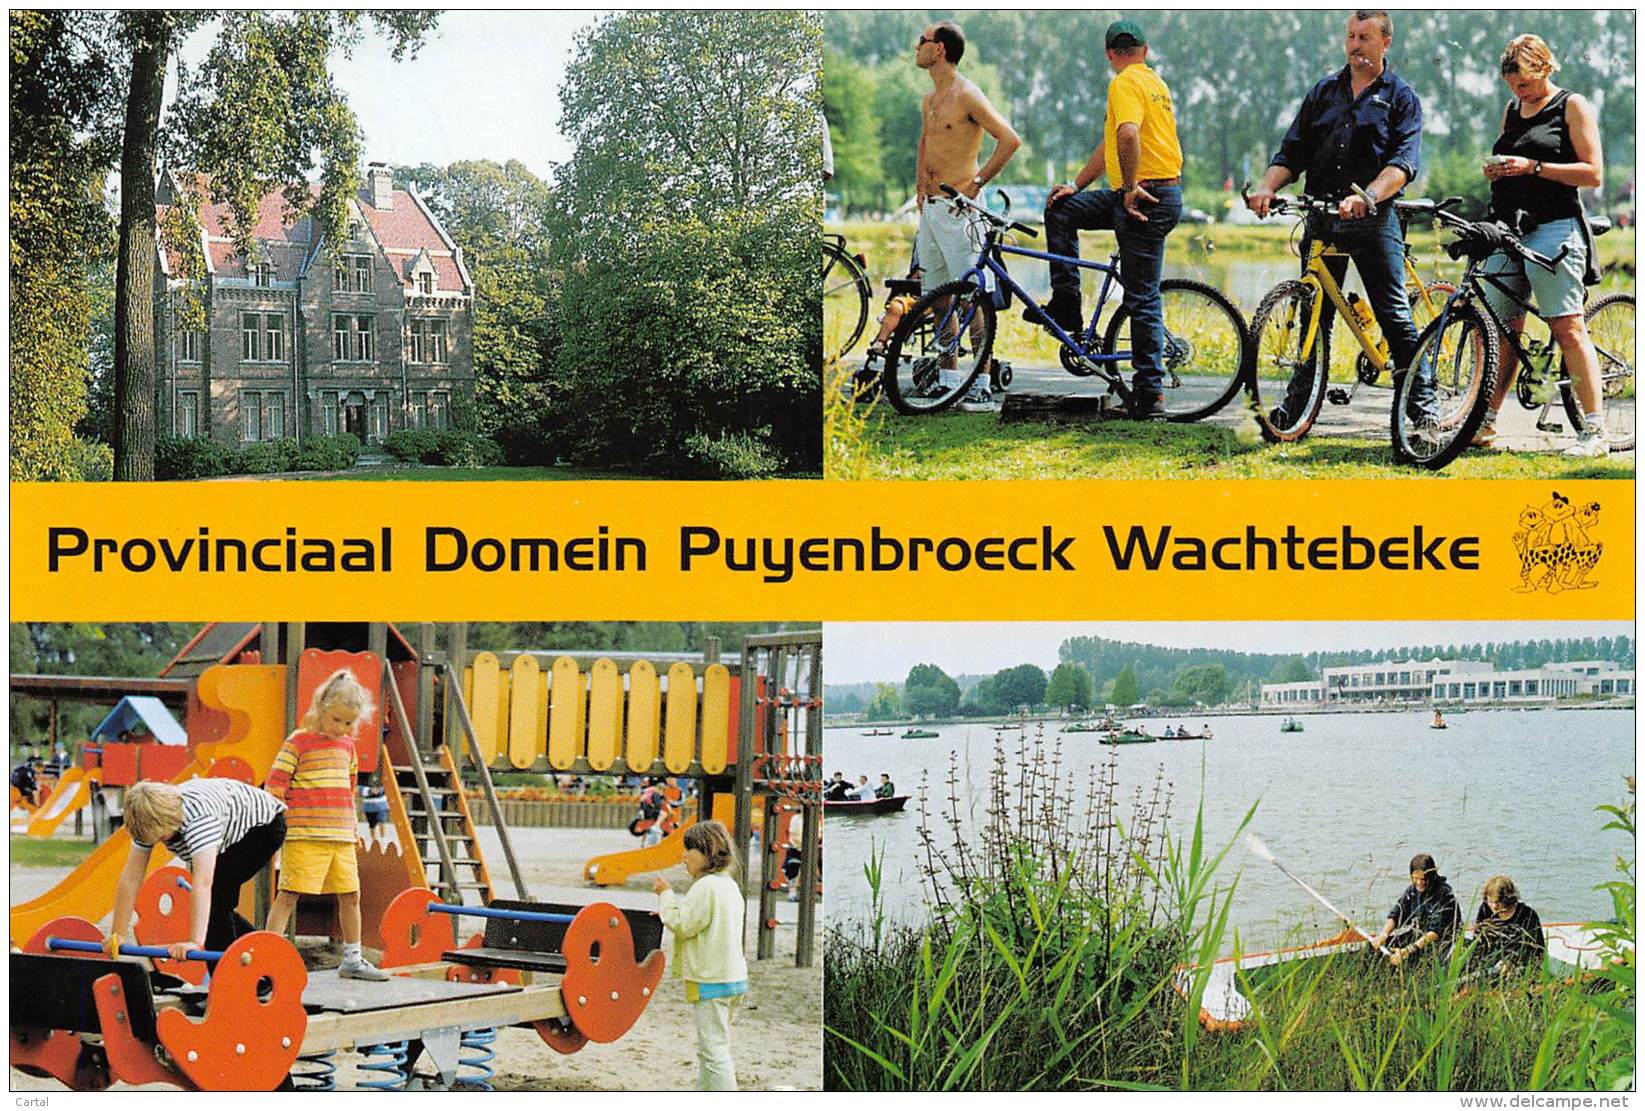 CPM - WACHTEBEKE - Provinciaal Domein Puyenbroeck - Wachtebeke